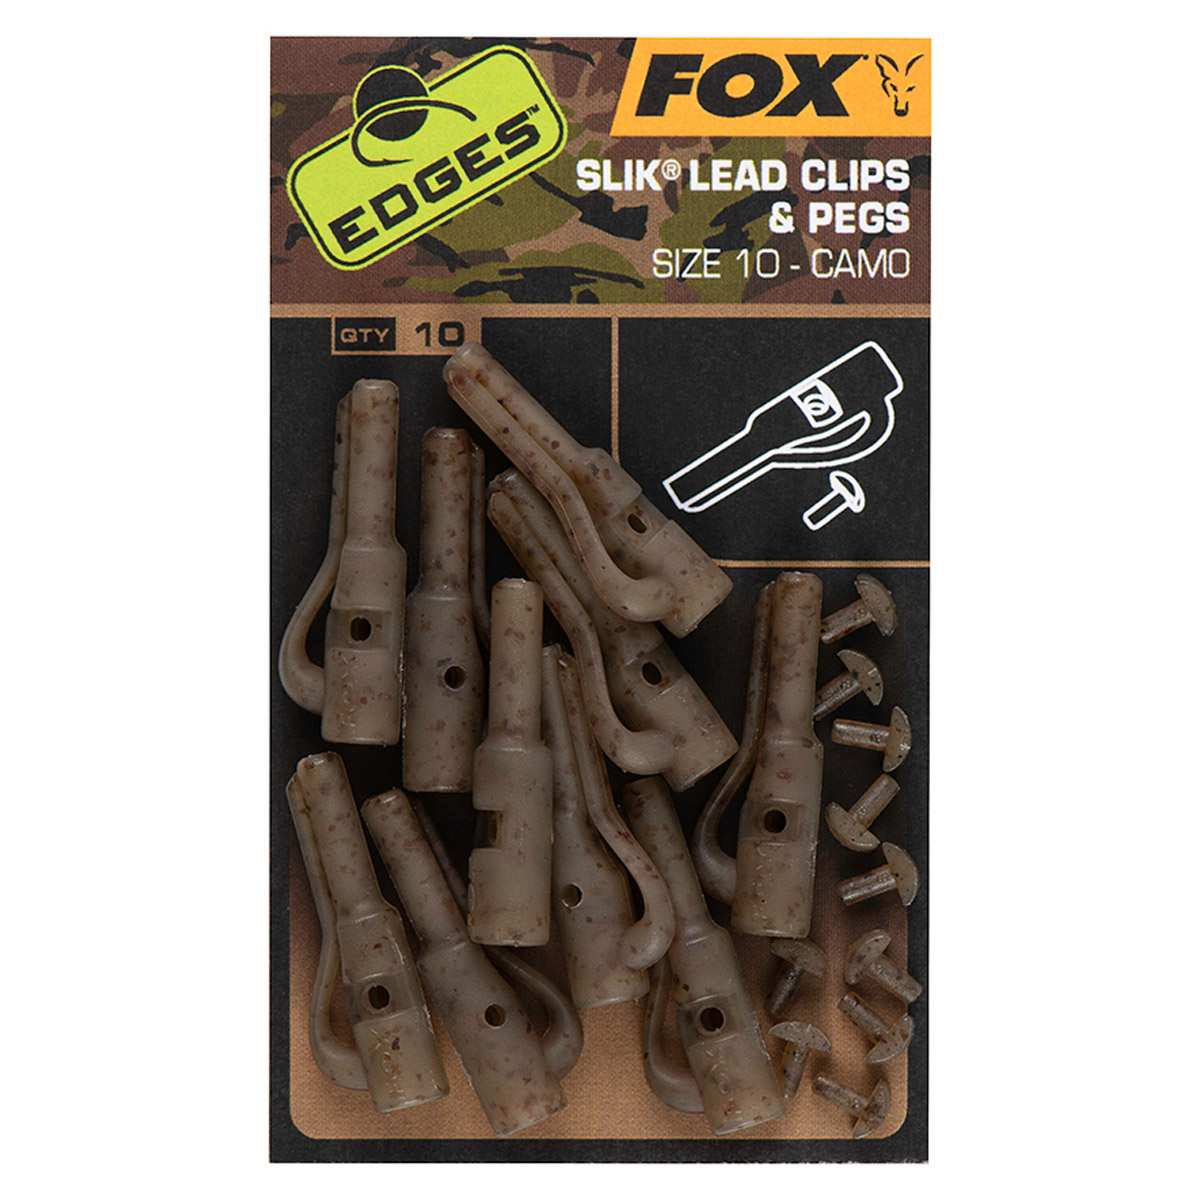 Fox Edges Camo Slik Lead Clips & Pegs Size 10